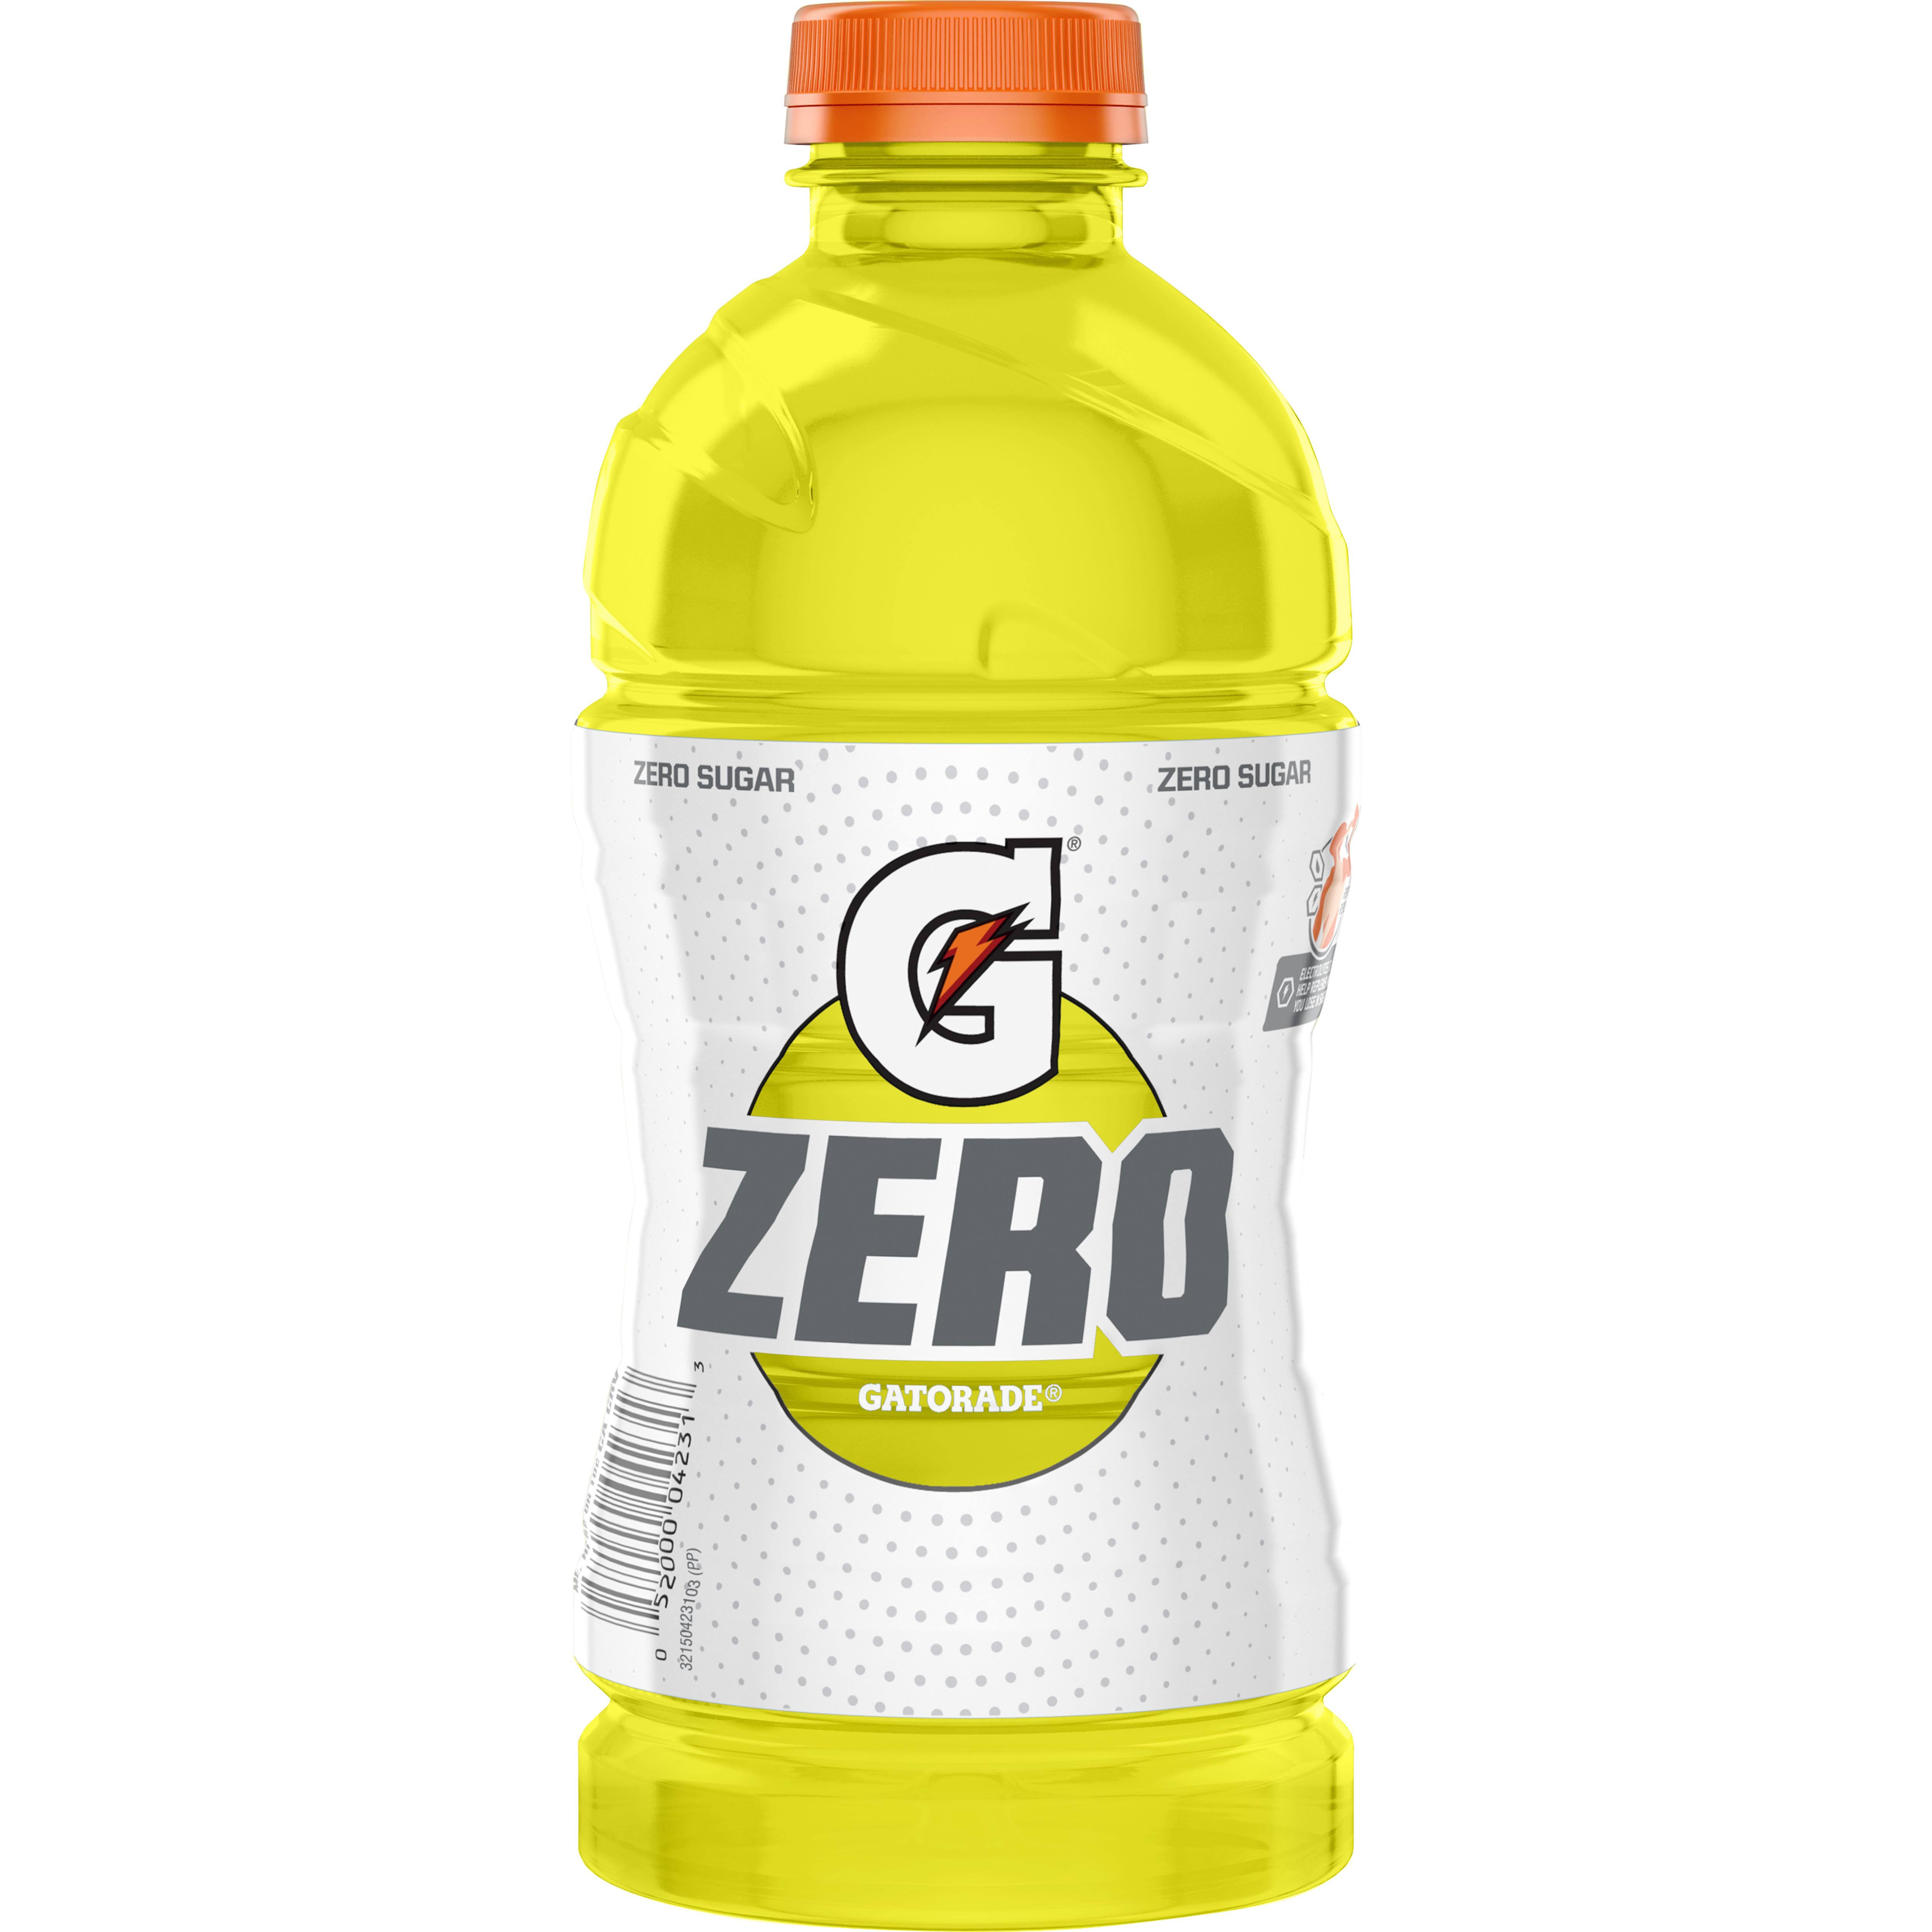 Gatorade Zero Thirst Quencher, Zero Sugar, Lemon-Lime - 28 fl oz